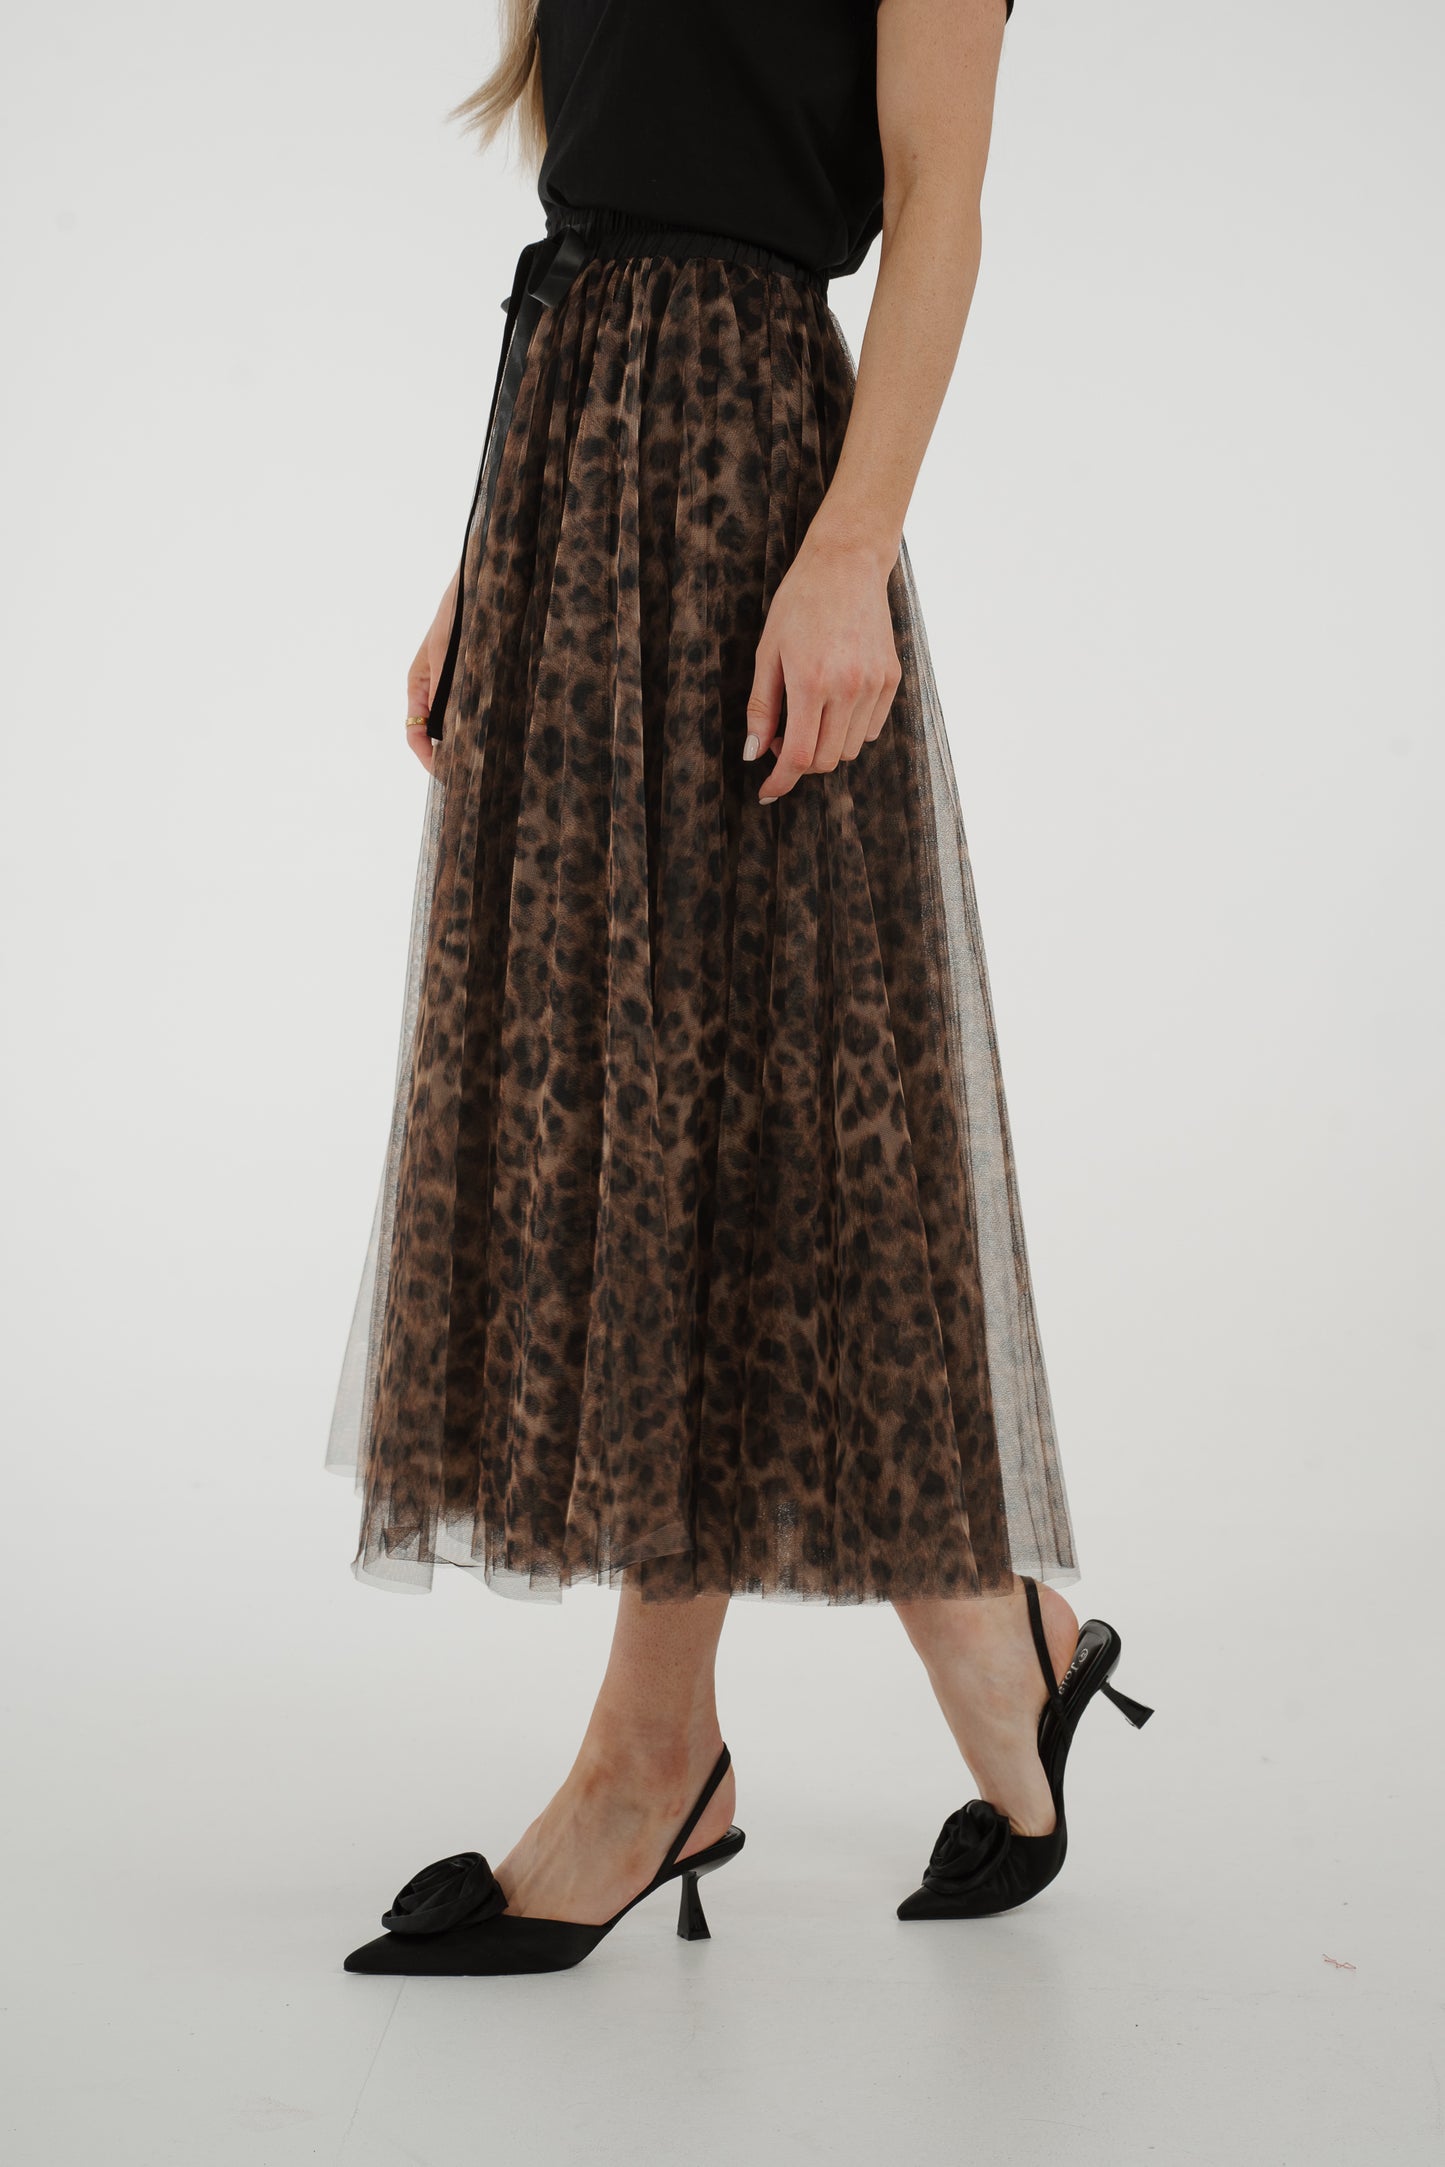 Polly Tulle Midi Skirt In Leopard Print